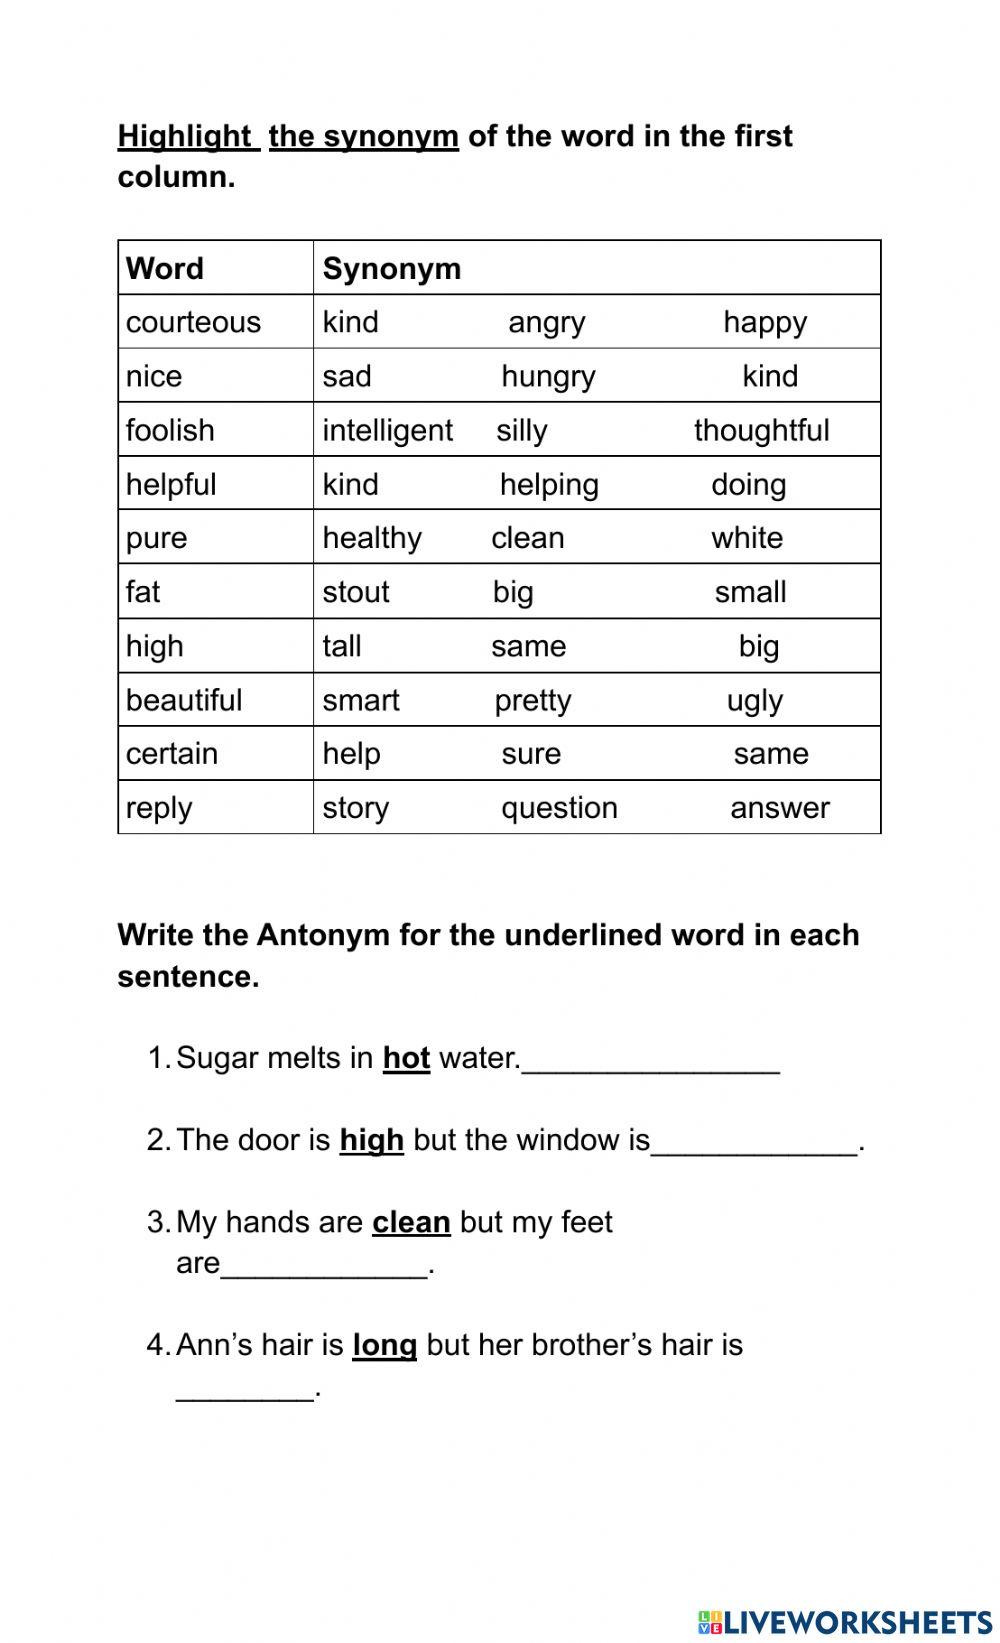 Vocabulary - Study - Skills